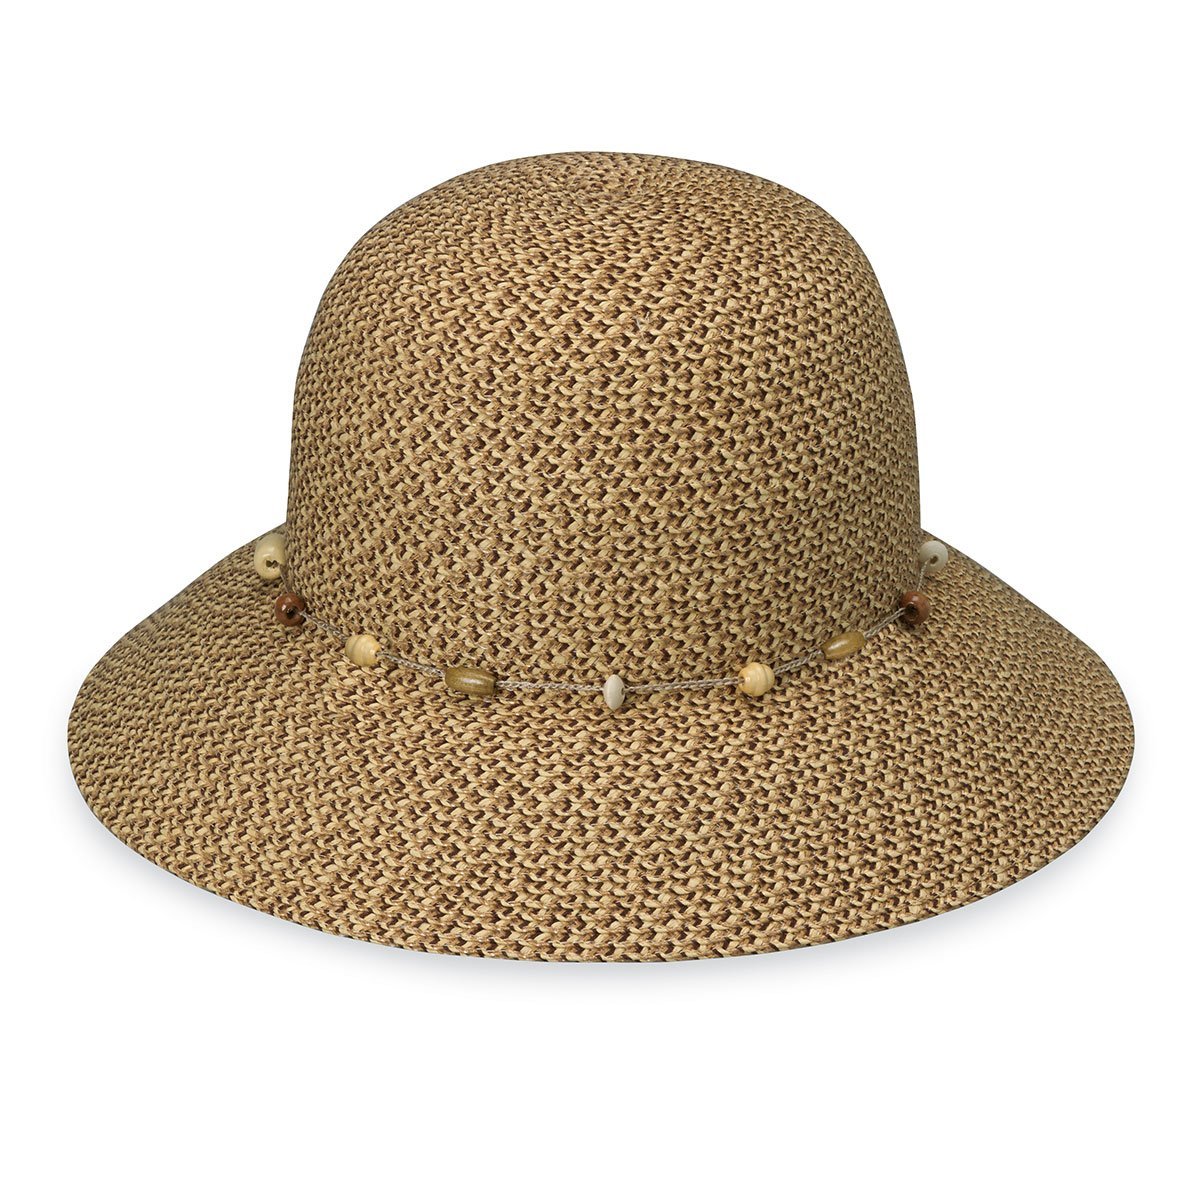 Featuring Women's Packable UPF Bucket Style Naomi Summer Sun Hat from Wallaroo